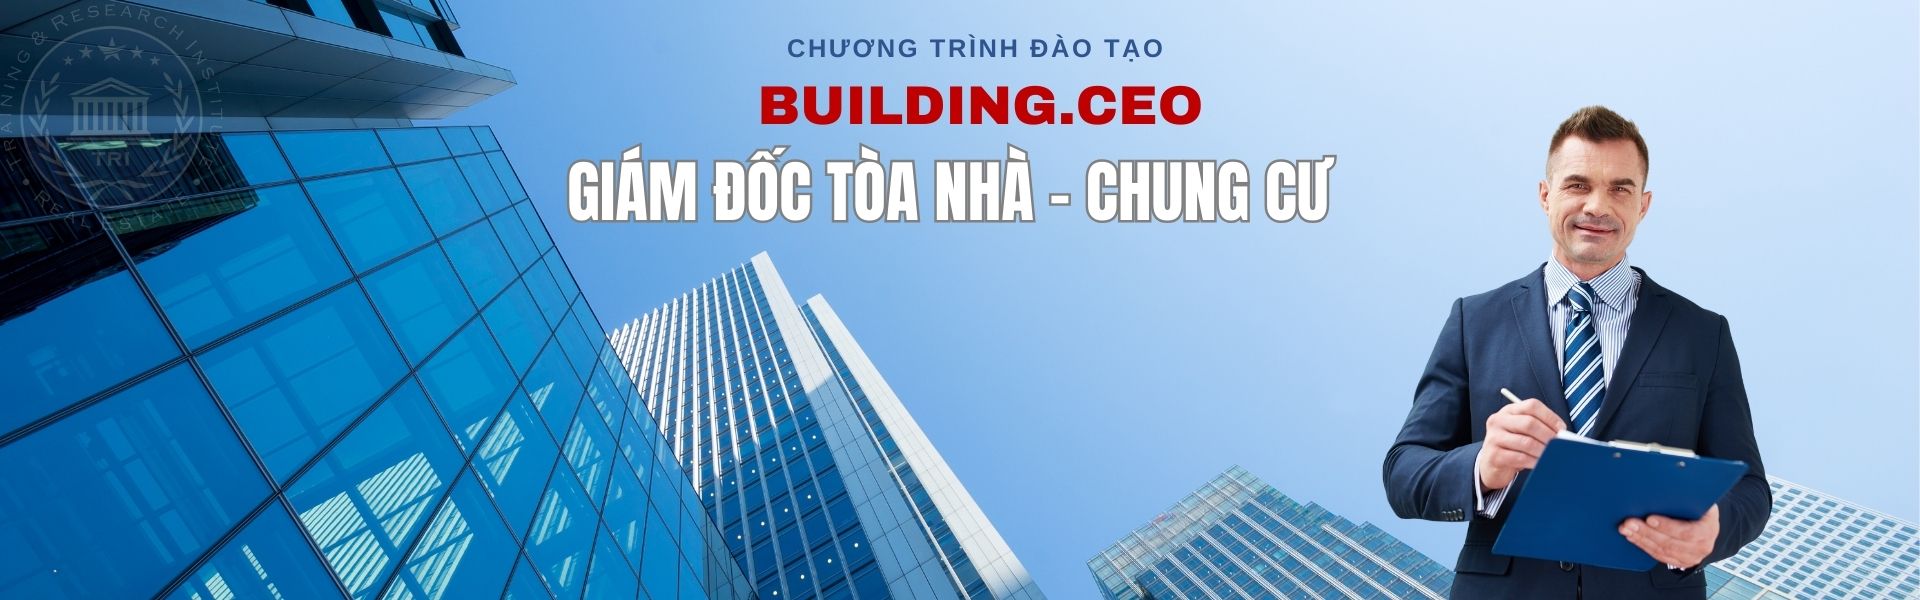 GIAM DOC TOA NHA CHUNG CU BUILDING.CEO